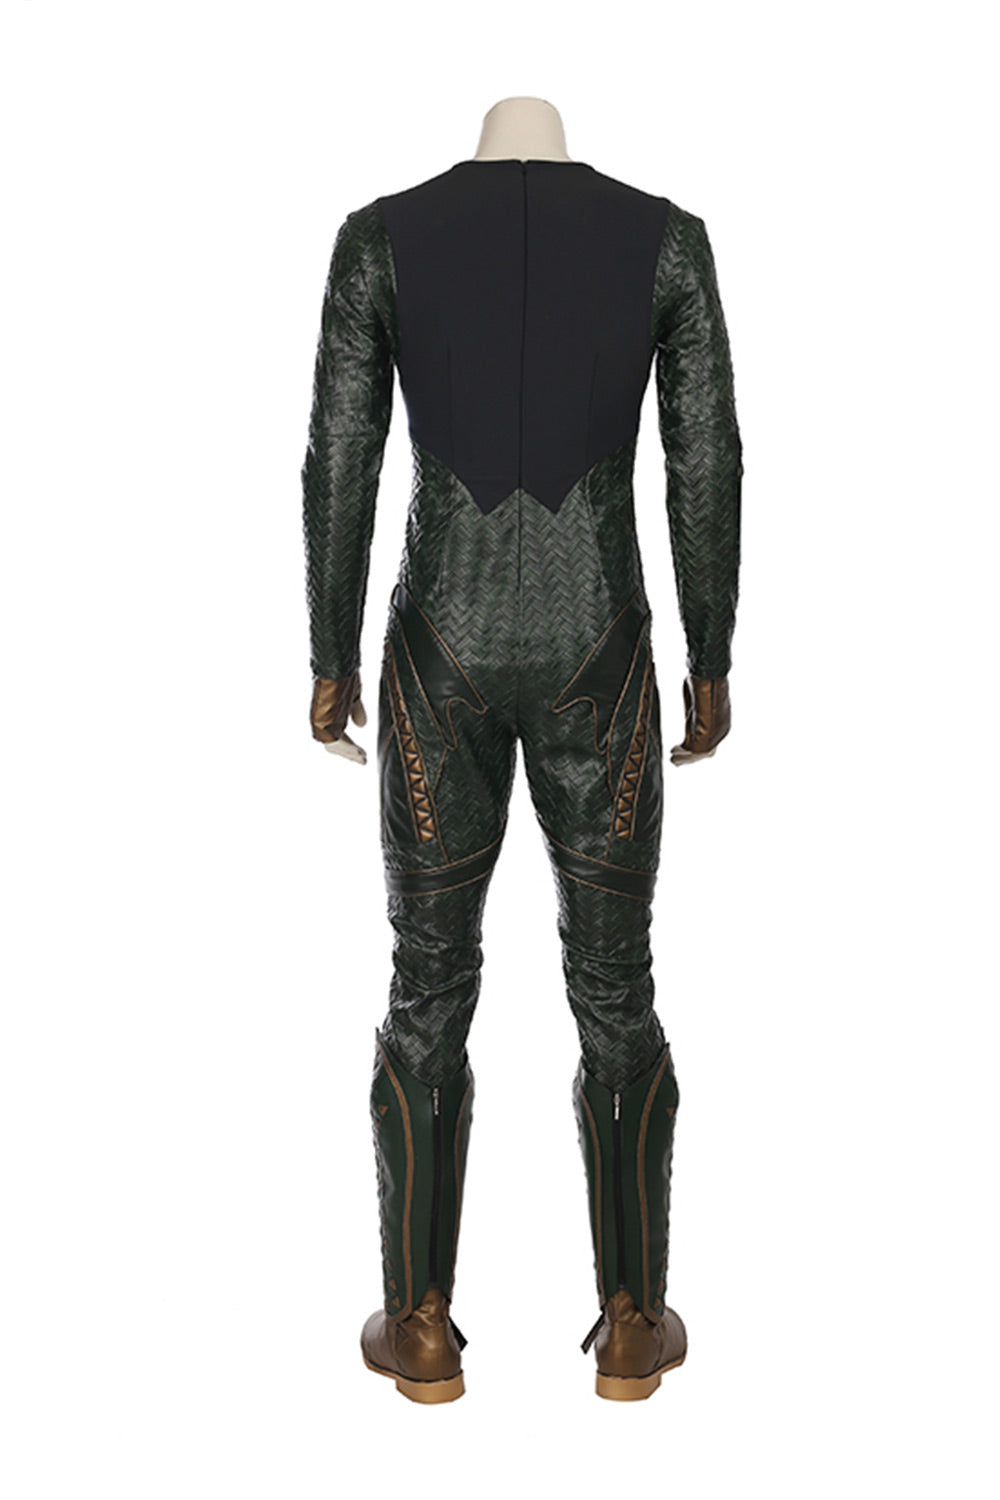 Justice League 2017 Film Arthur Curry 2018 Aquaman Cosplay Costume